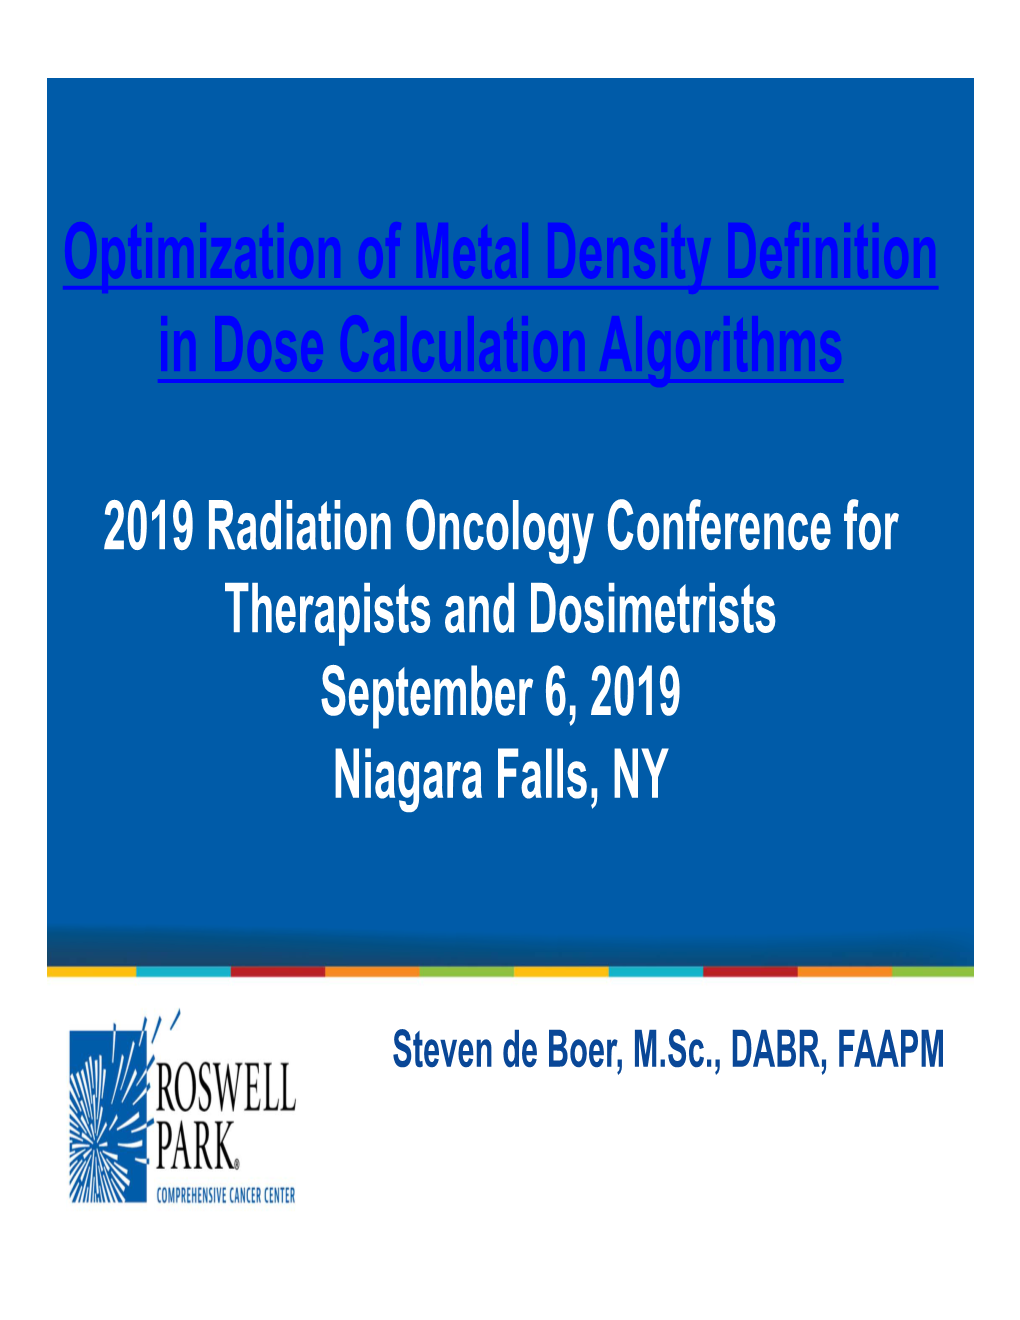 Optimization of Metal Density Definition in Dose Calculation Algorithms